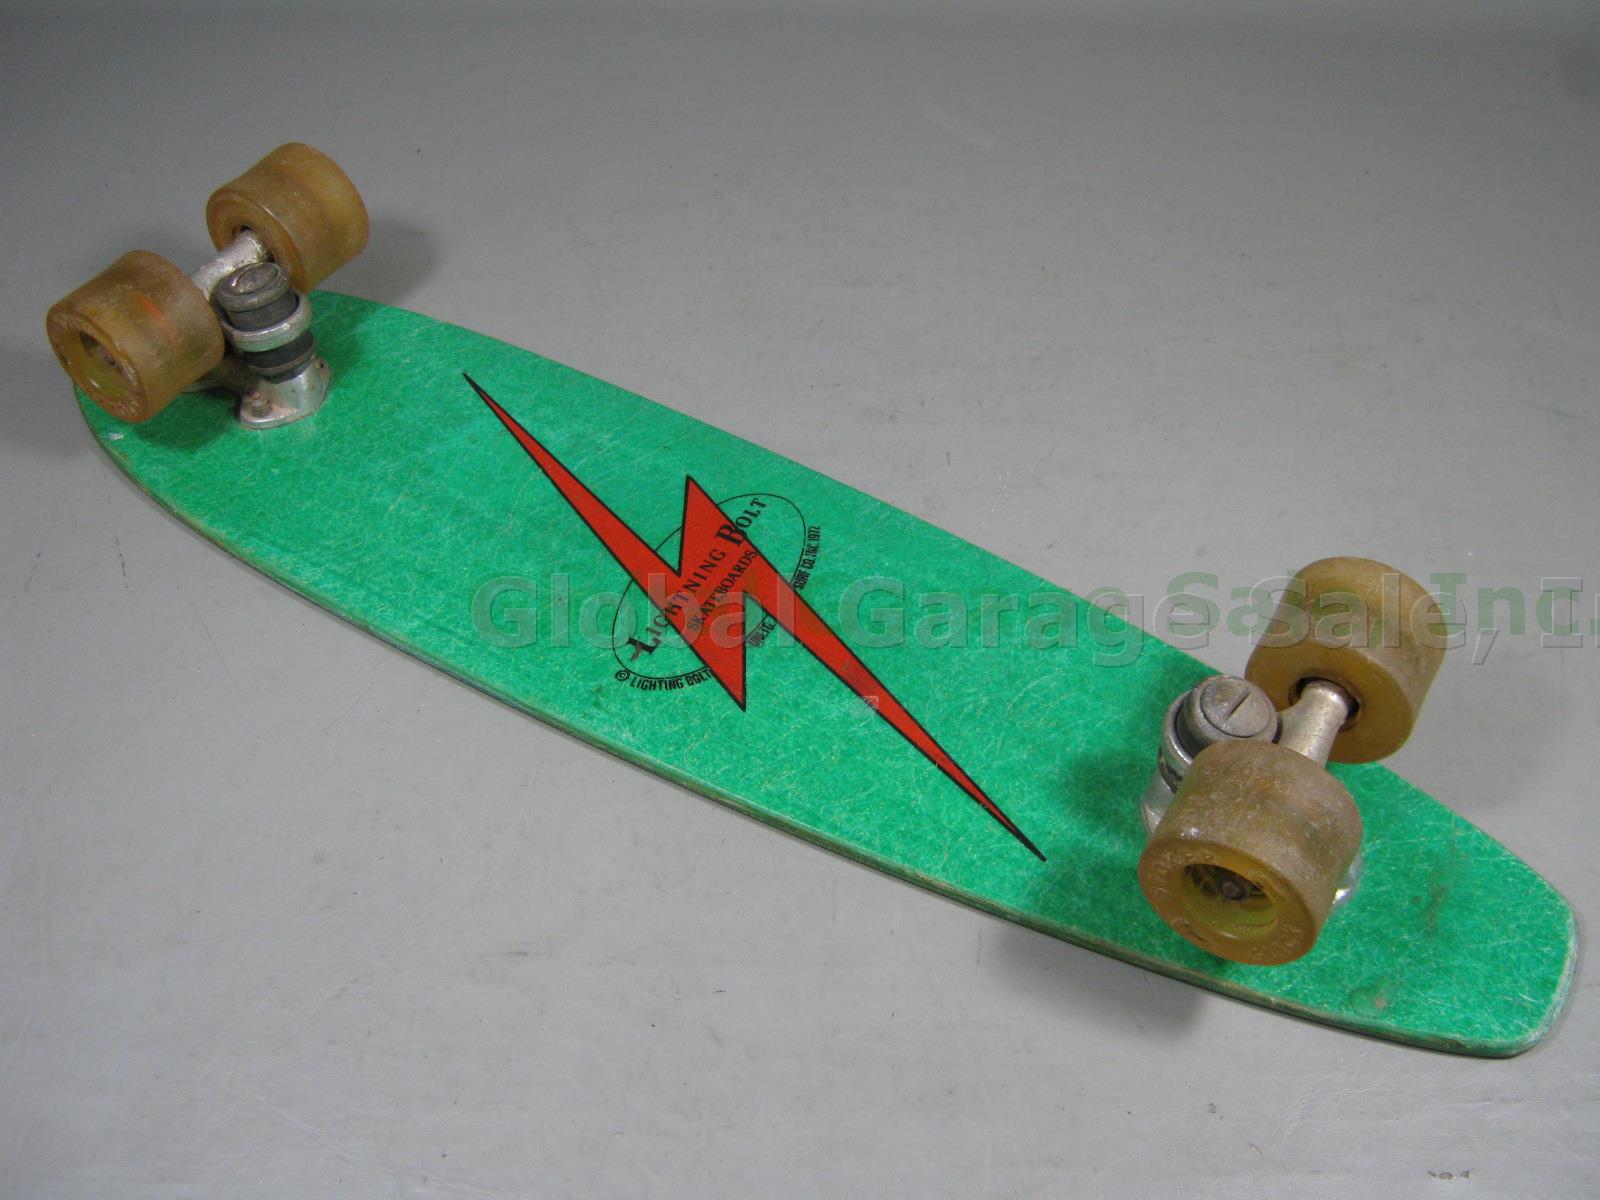 70s Lightning Bolt Unlimited Surf Fiberglass Skateboard Stocker Slick Sure Grip 4